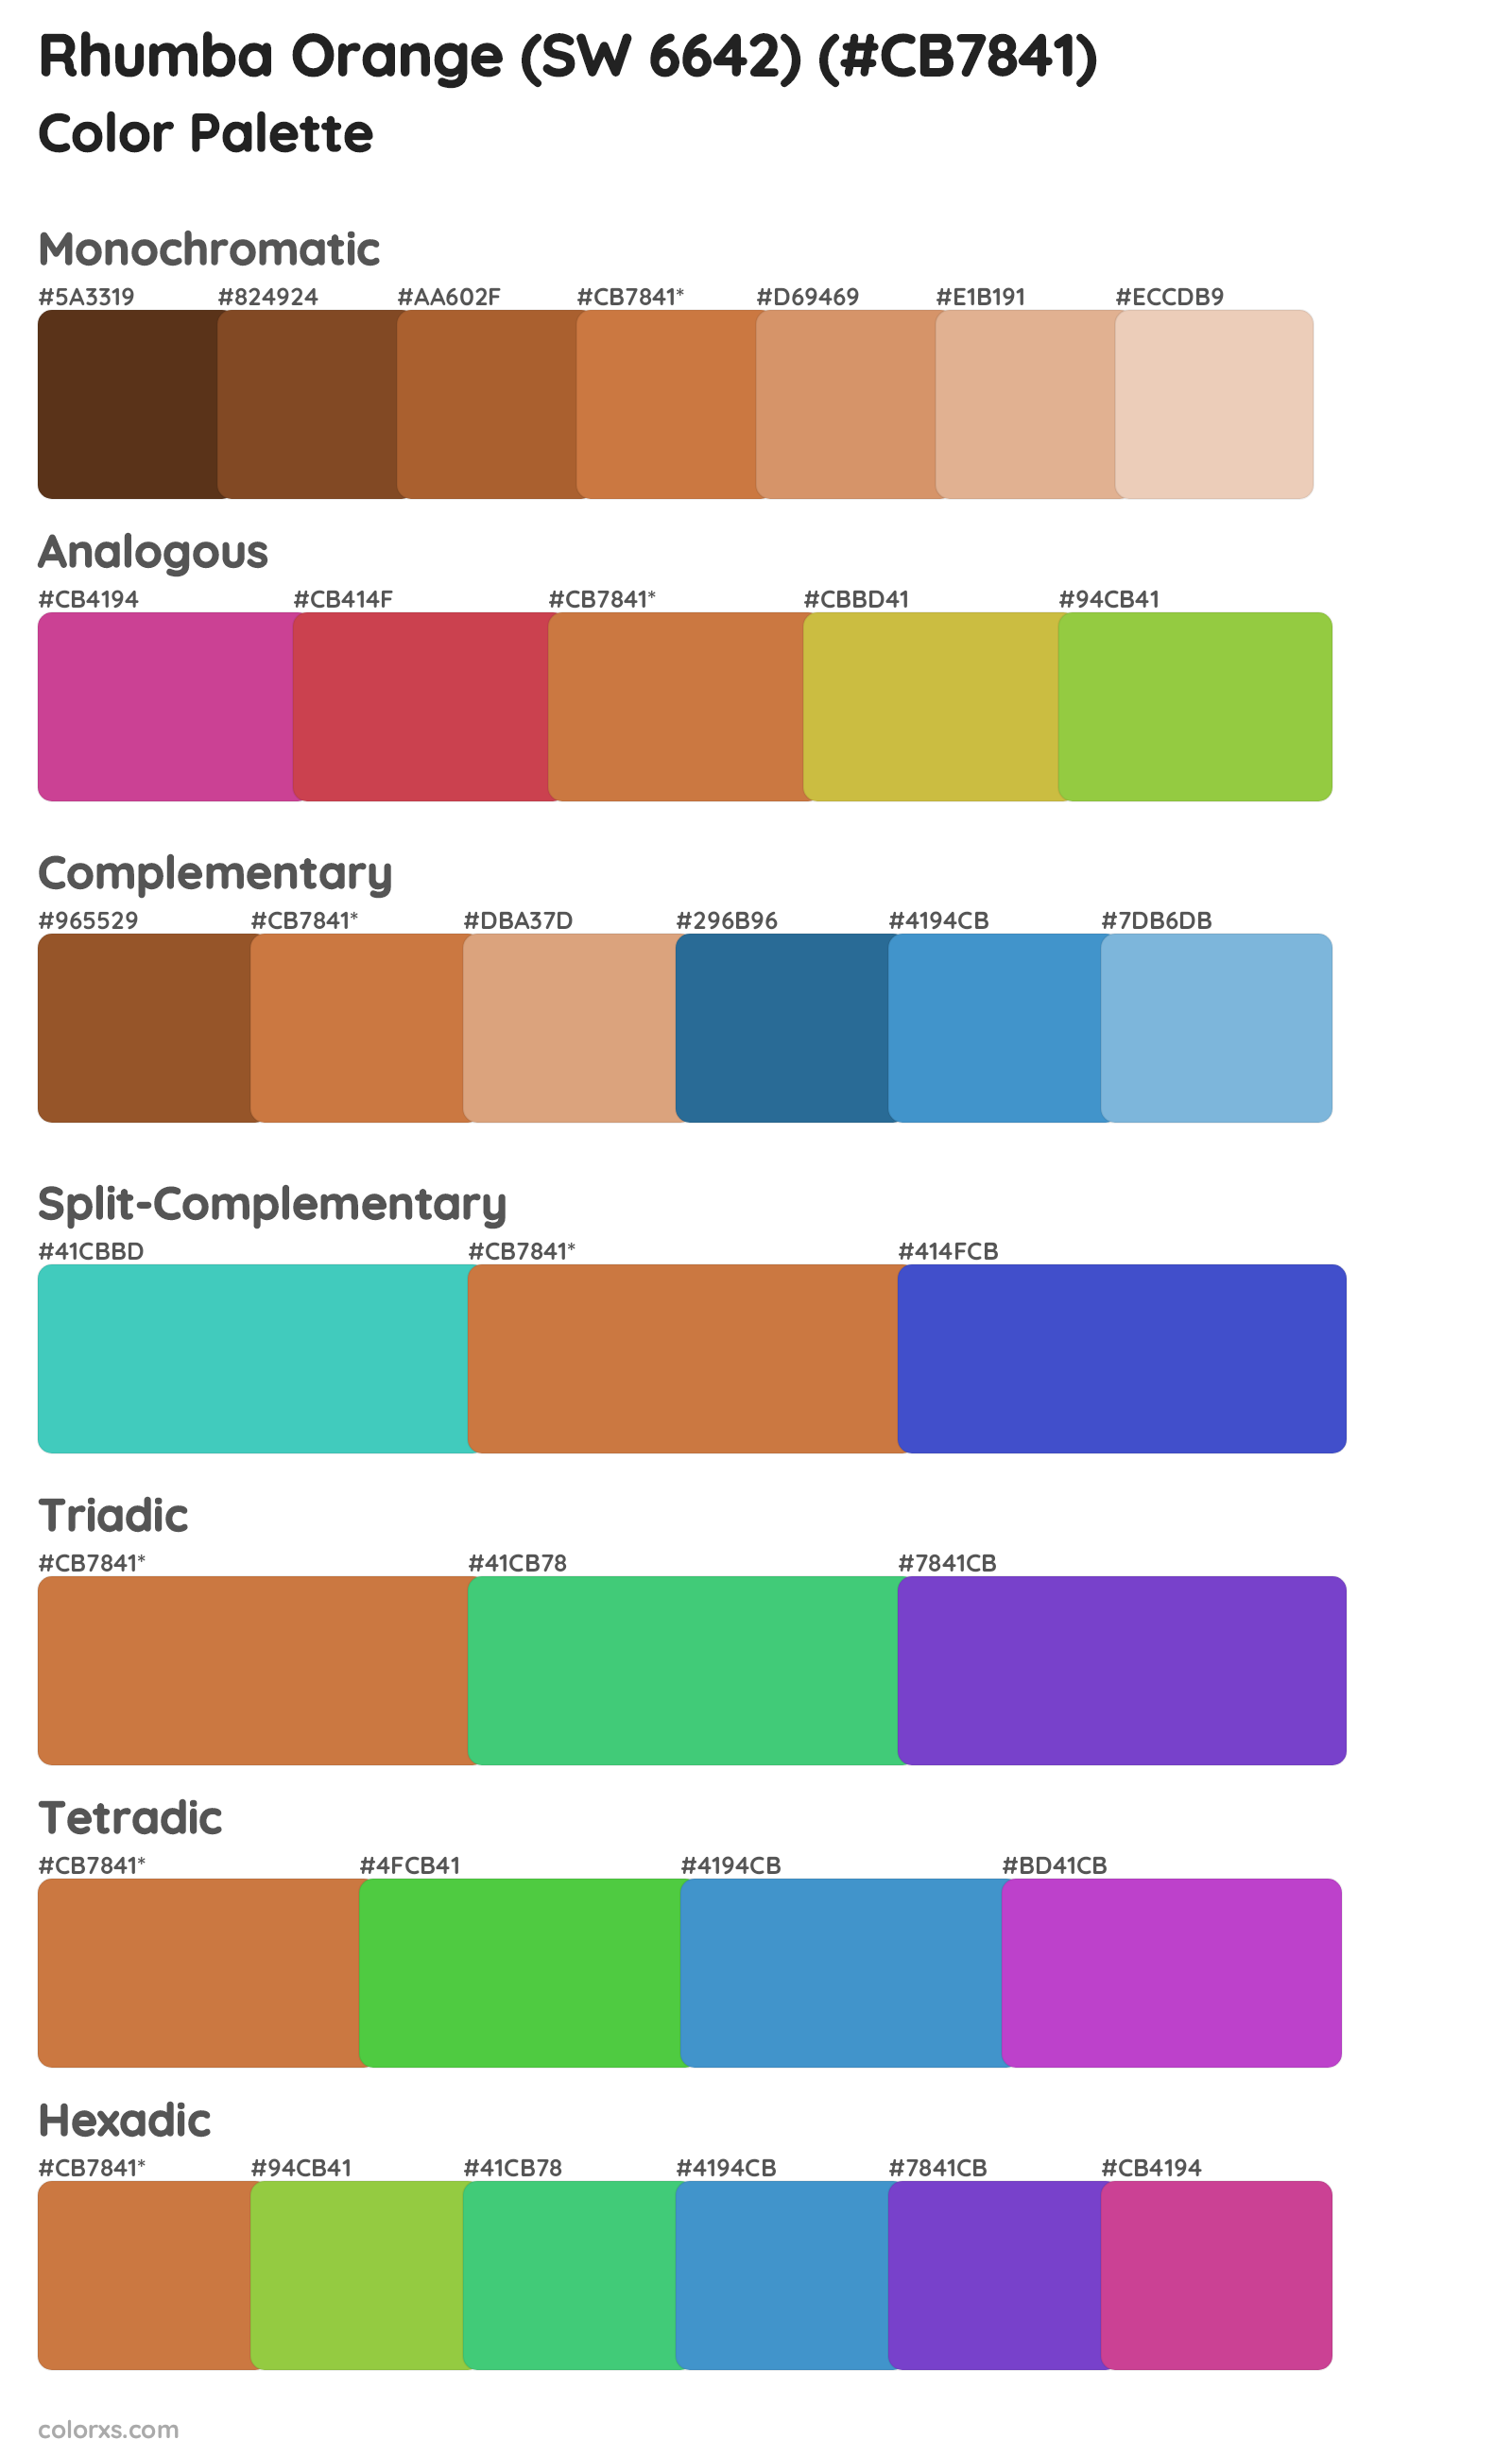 Rhumba Orange (SW 6642) Color Scheme Palettes